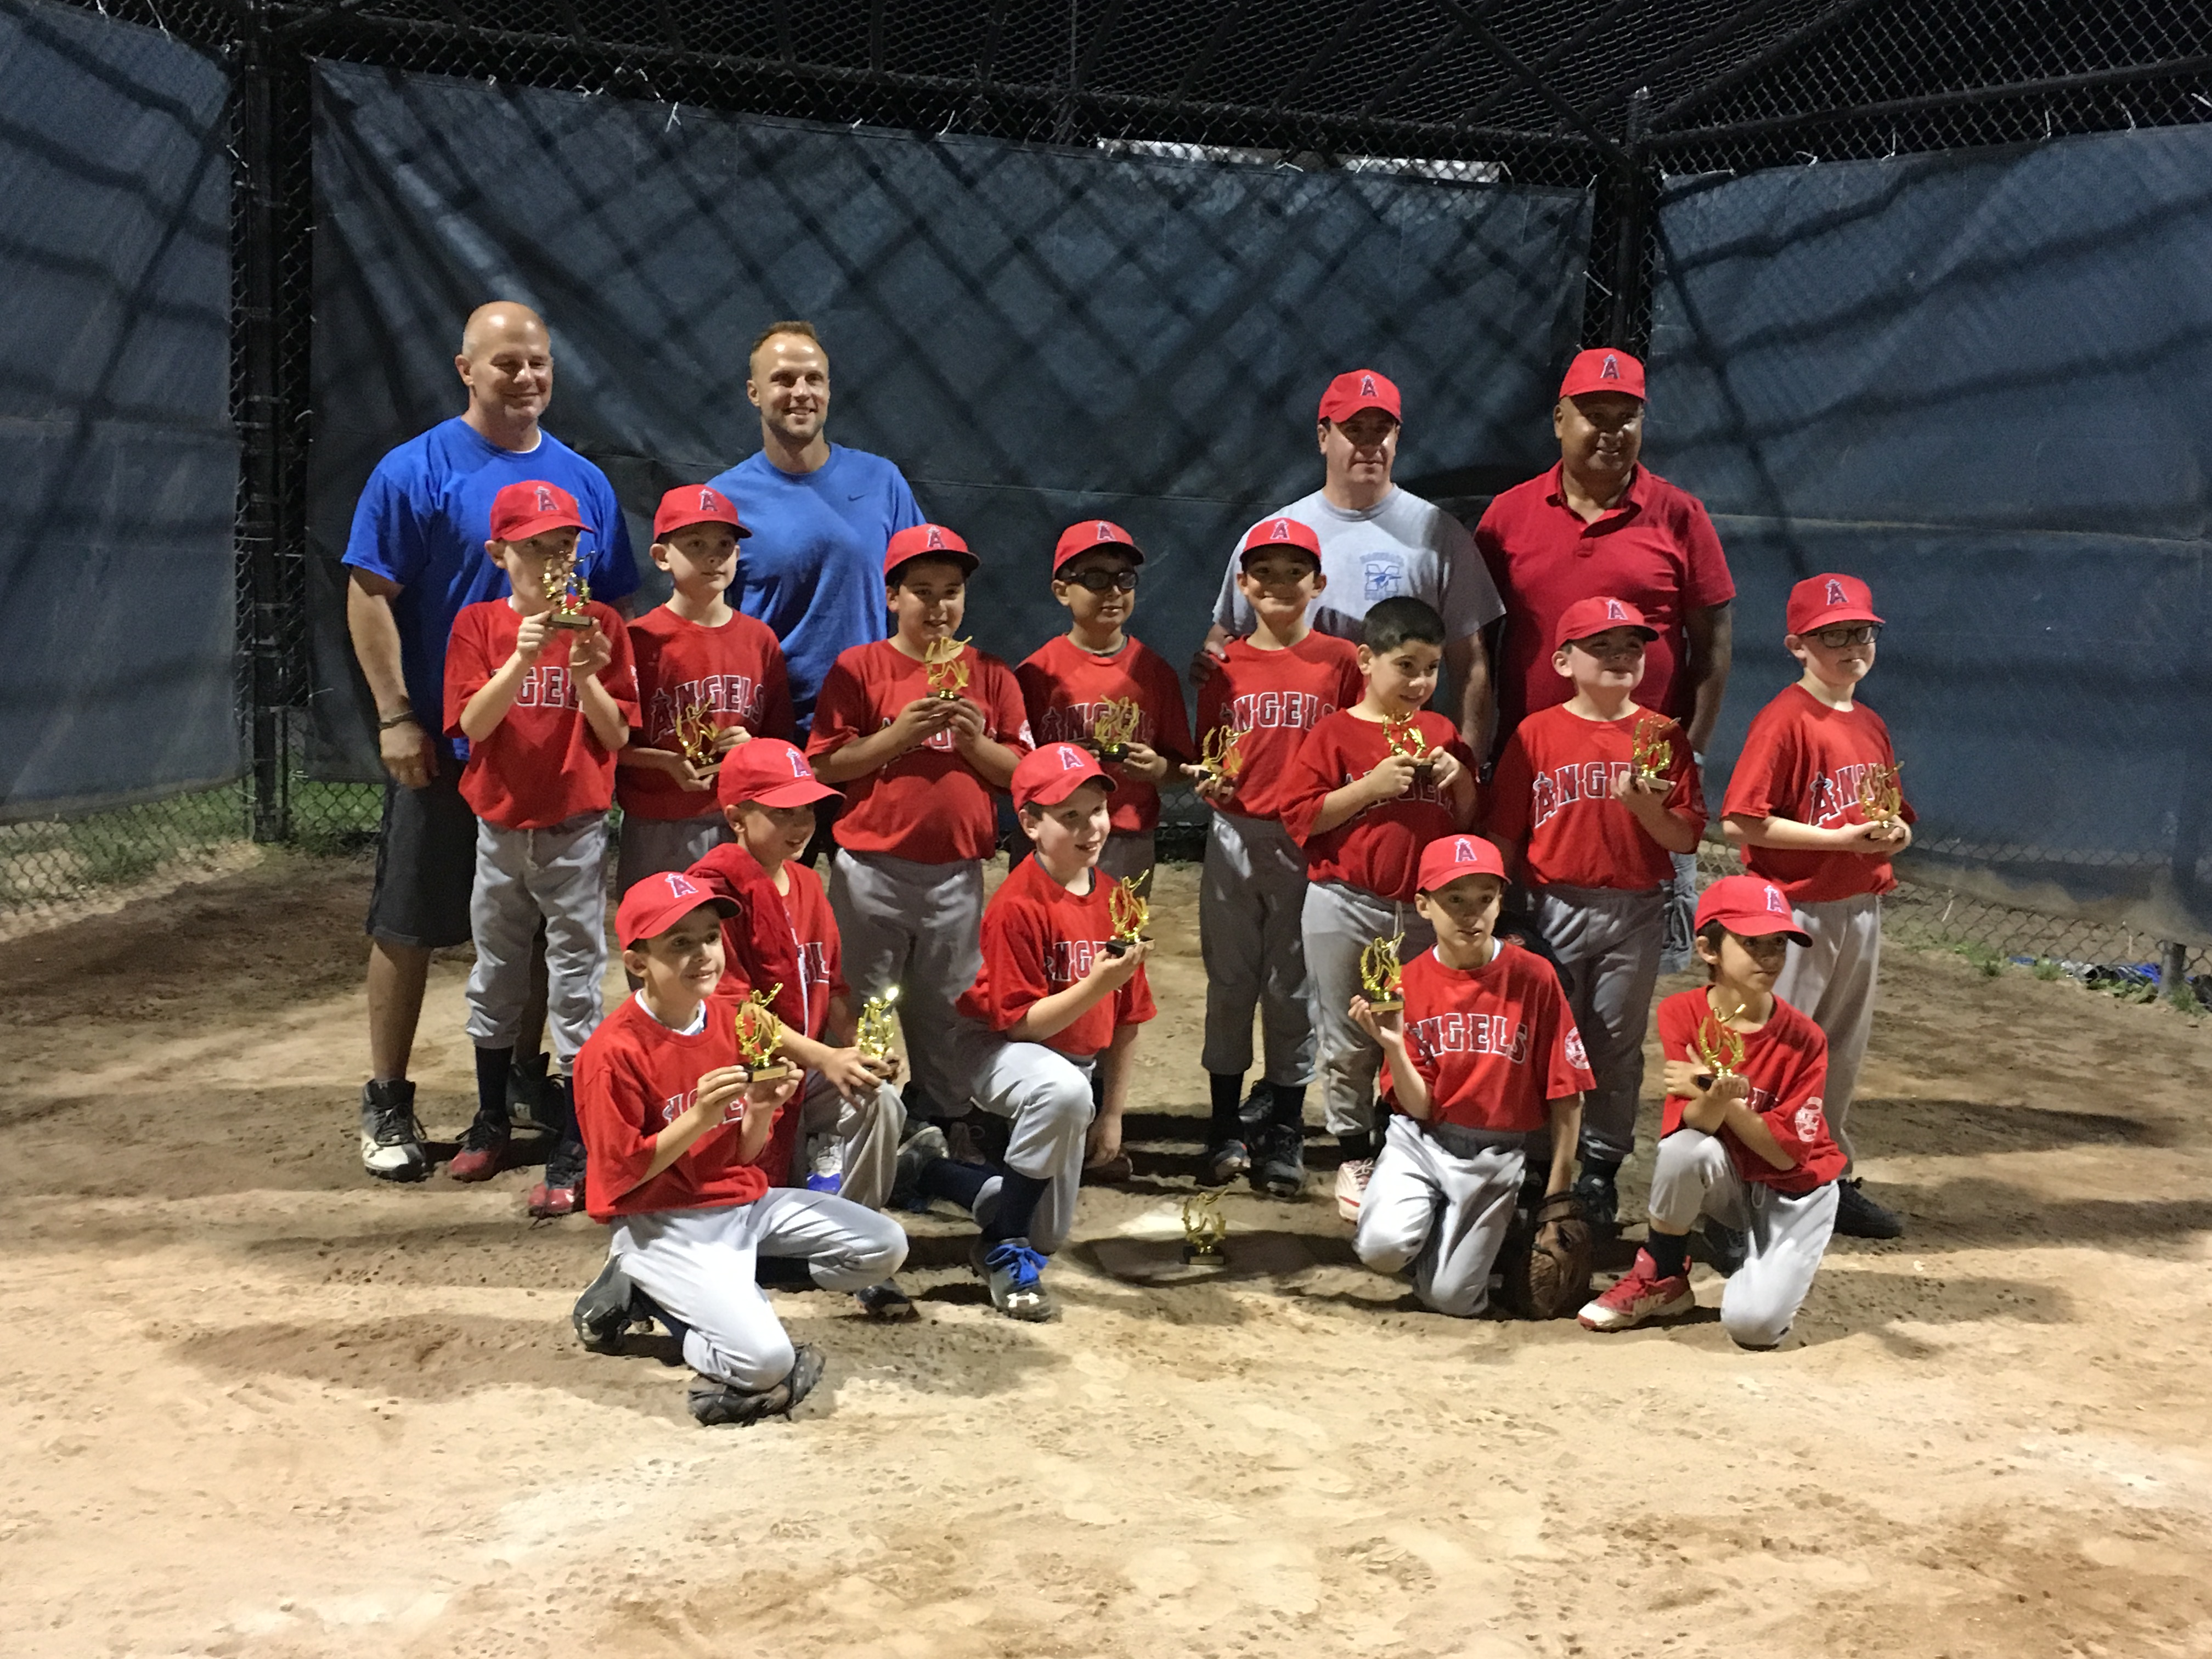 San Antonio youth baseball team crowned World Series champions